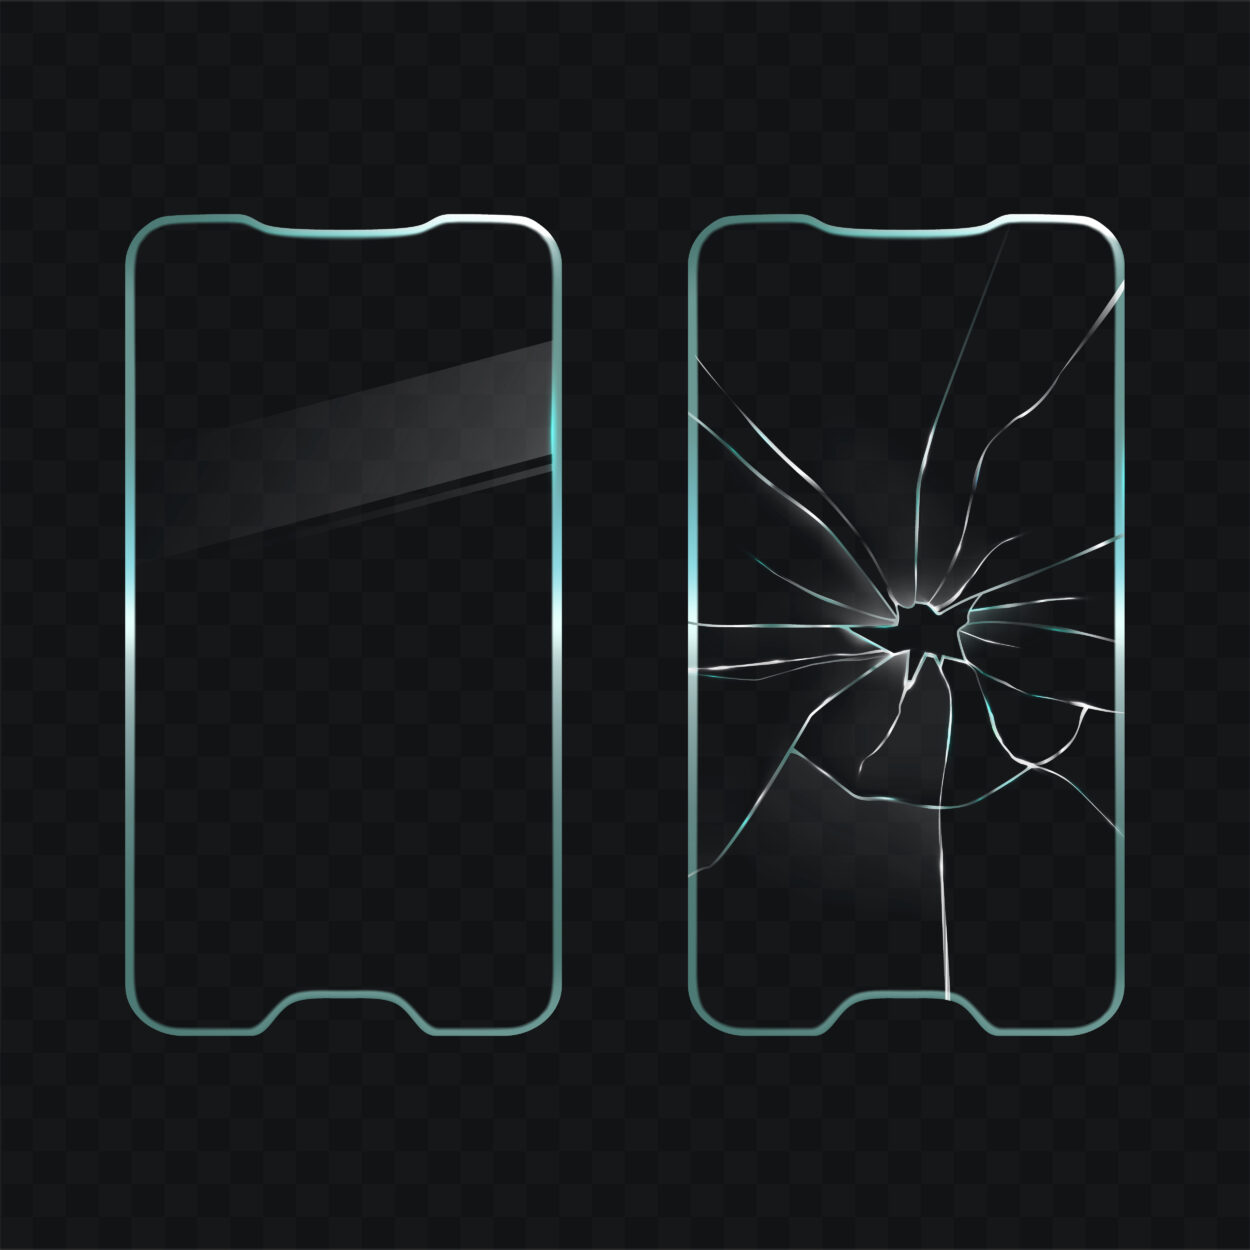 A new screen protector vs a broken one